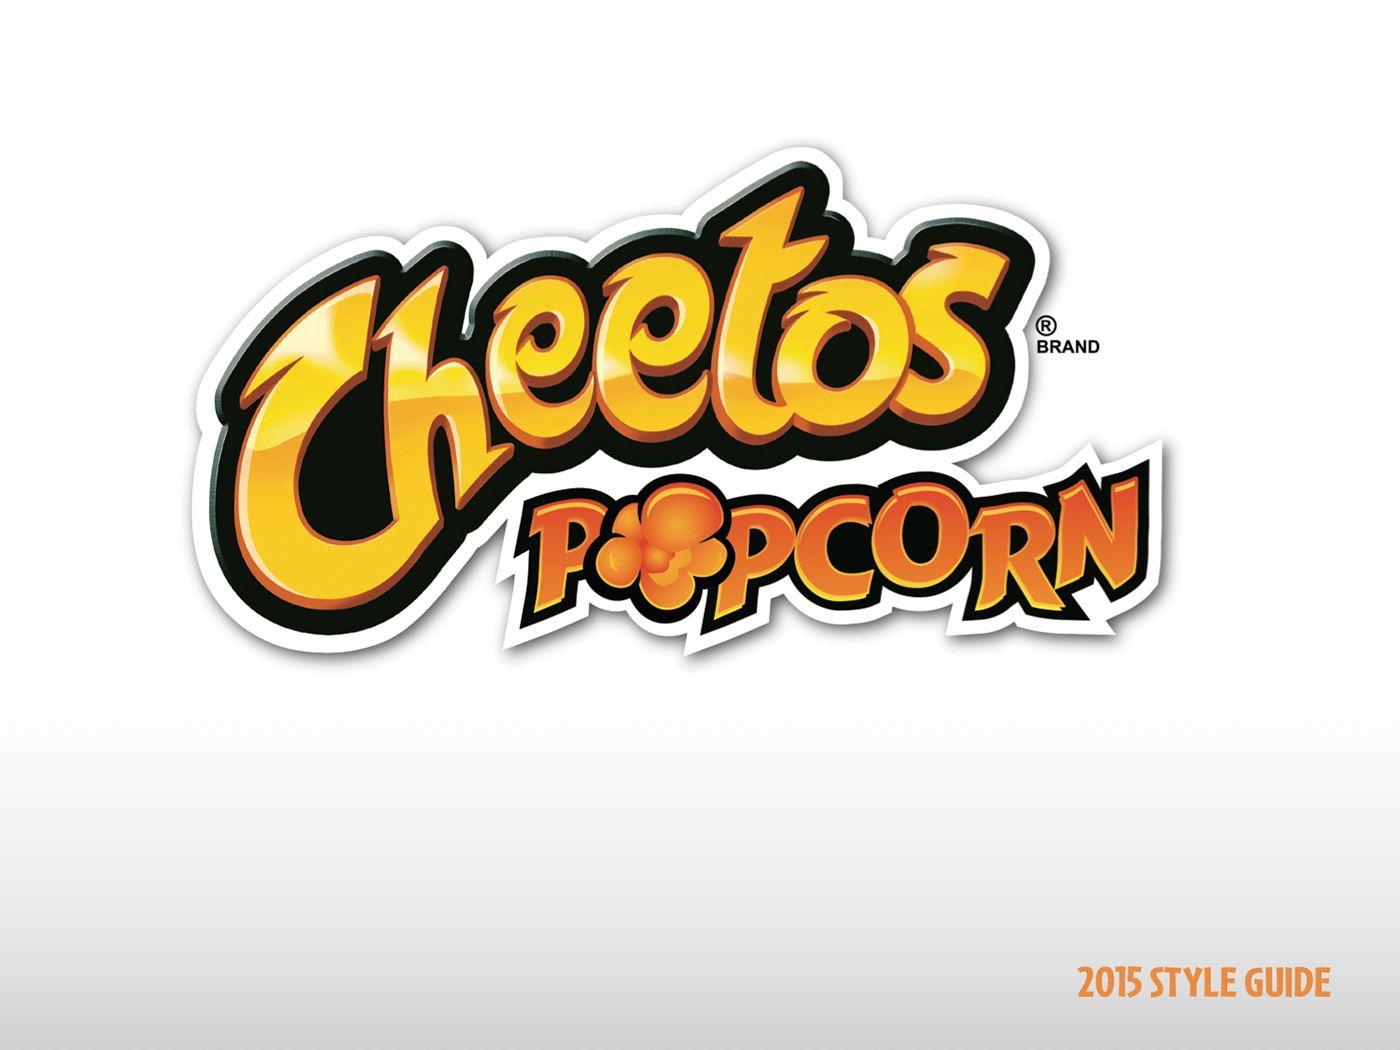 Popcorn Logo - CHEETOS POPCORN LOGO & STYLE GUIDE on Behance